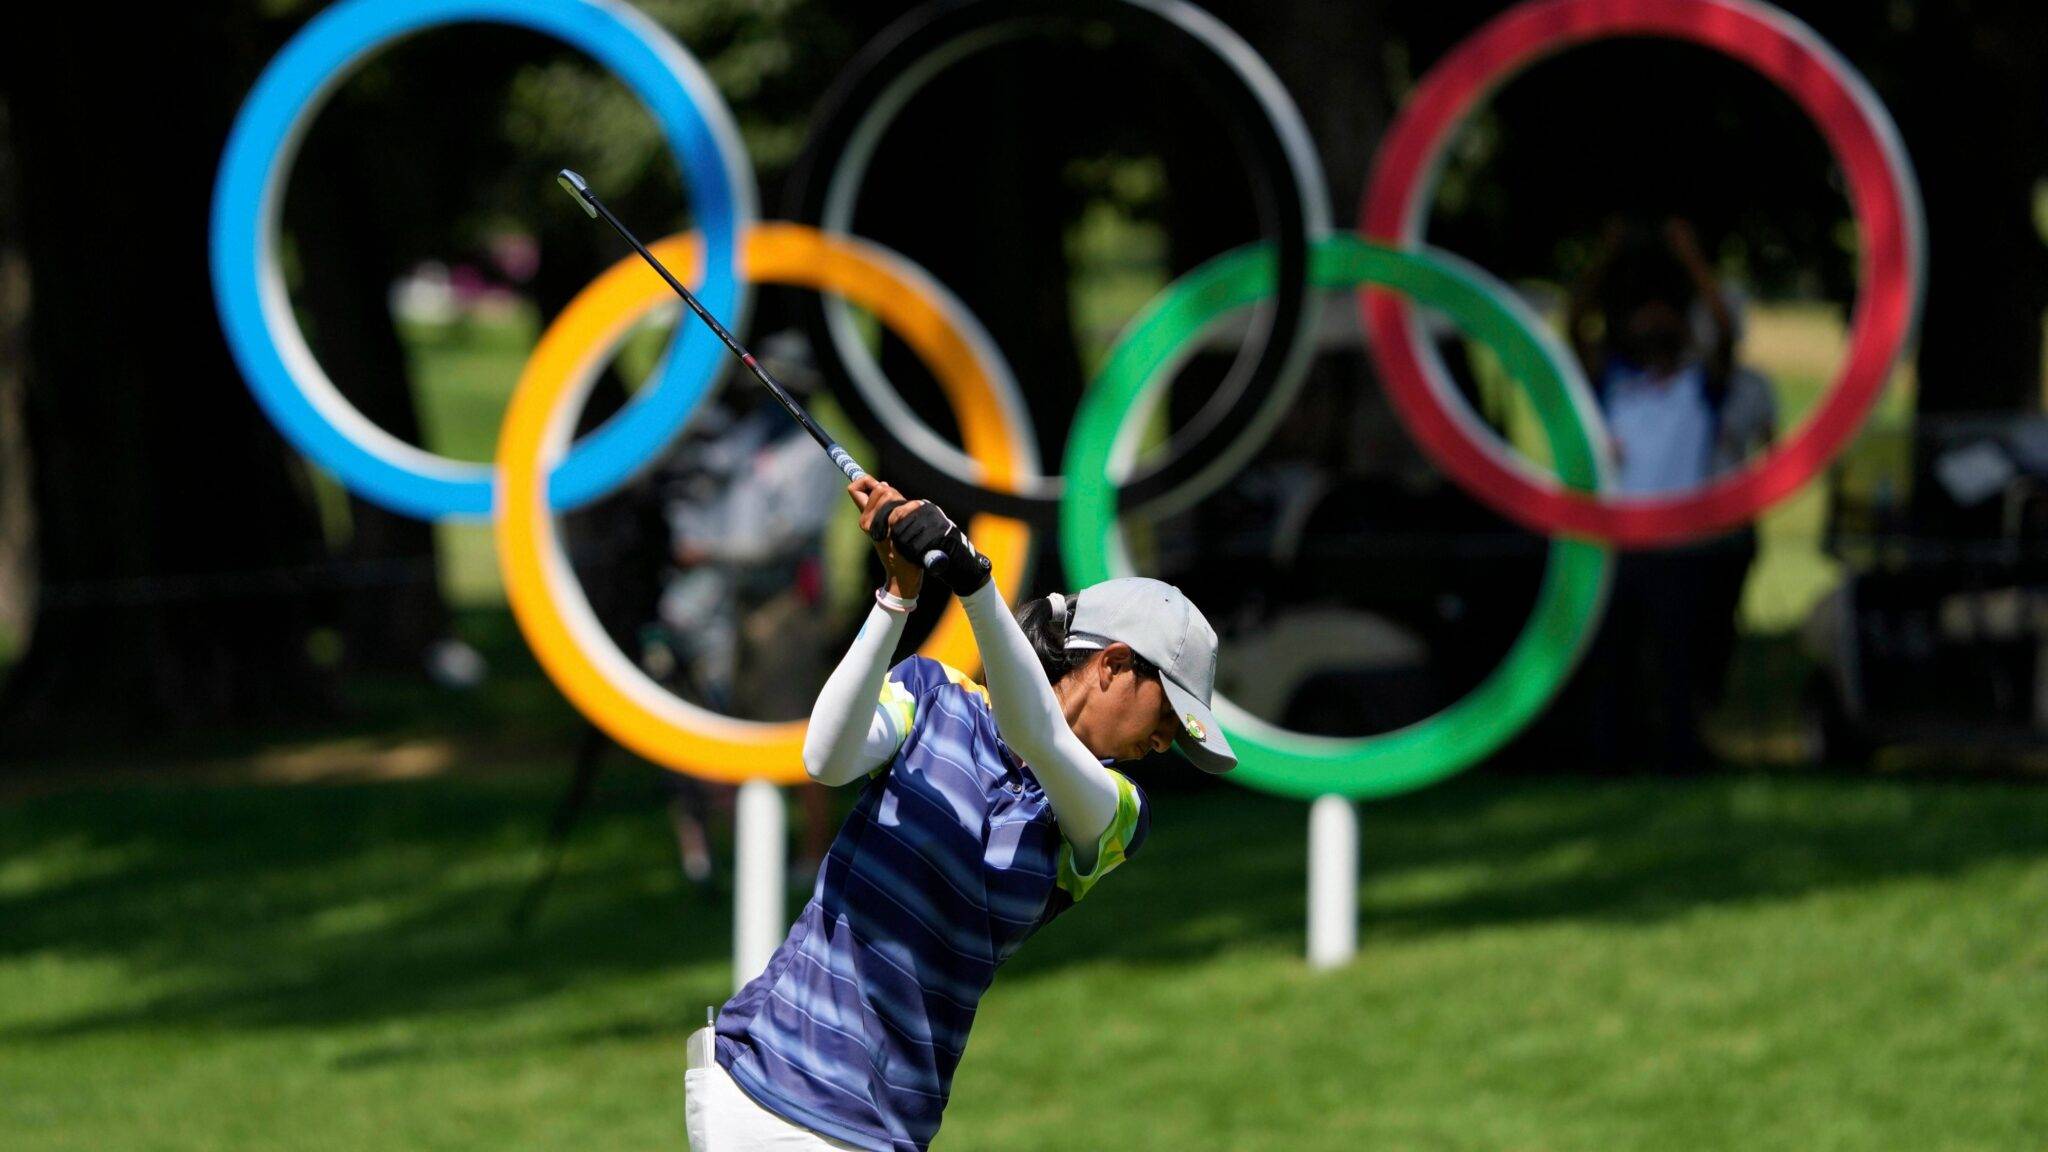 Golf: A new era after Olympics